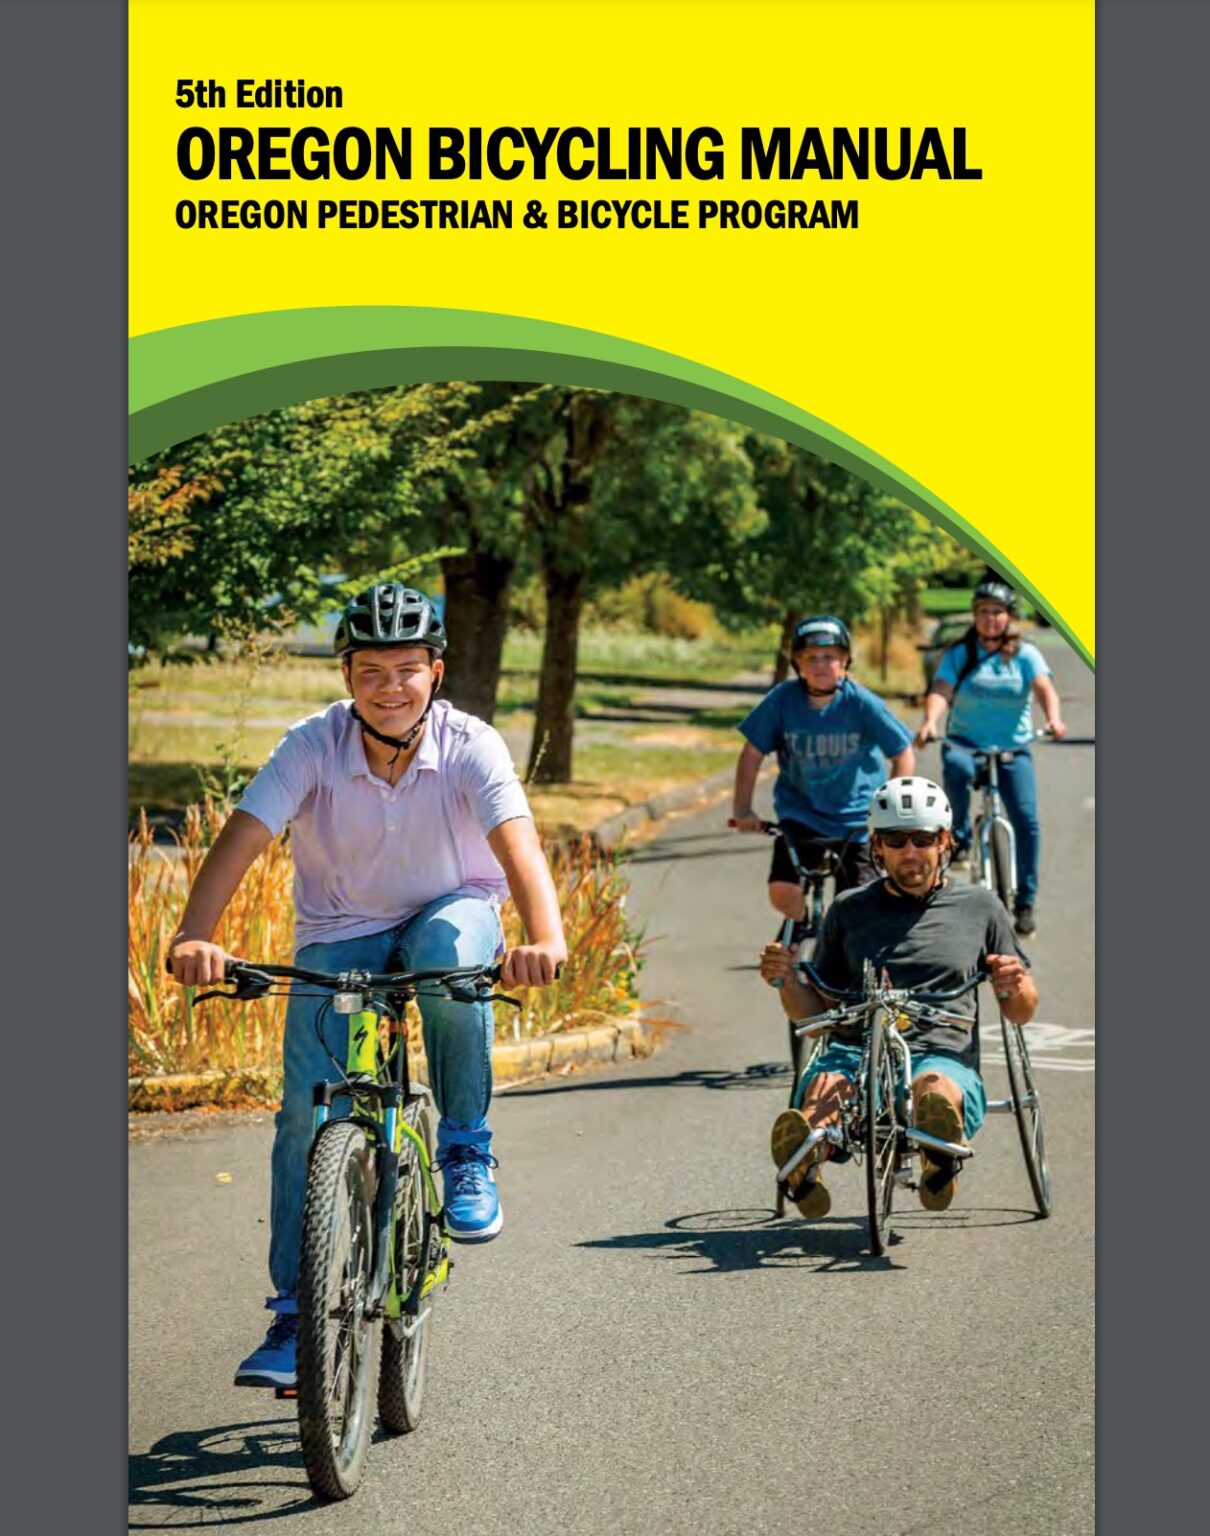 New Oregon statewide bicycling manual uses peoplefirst language